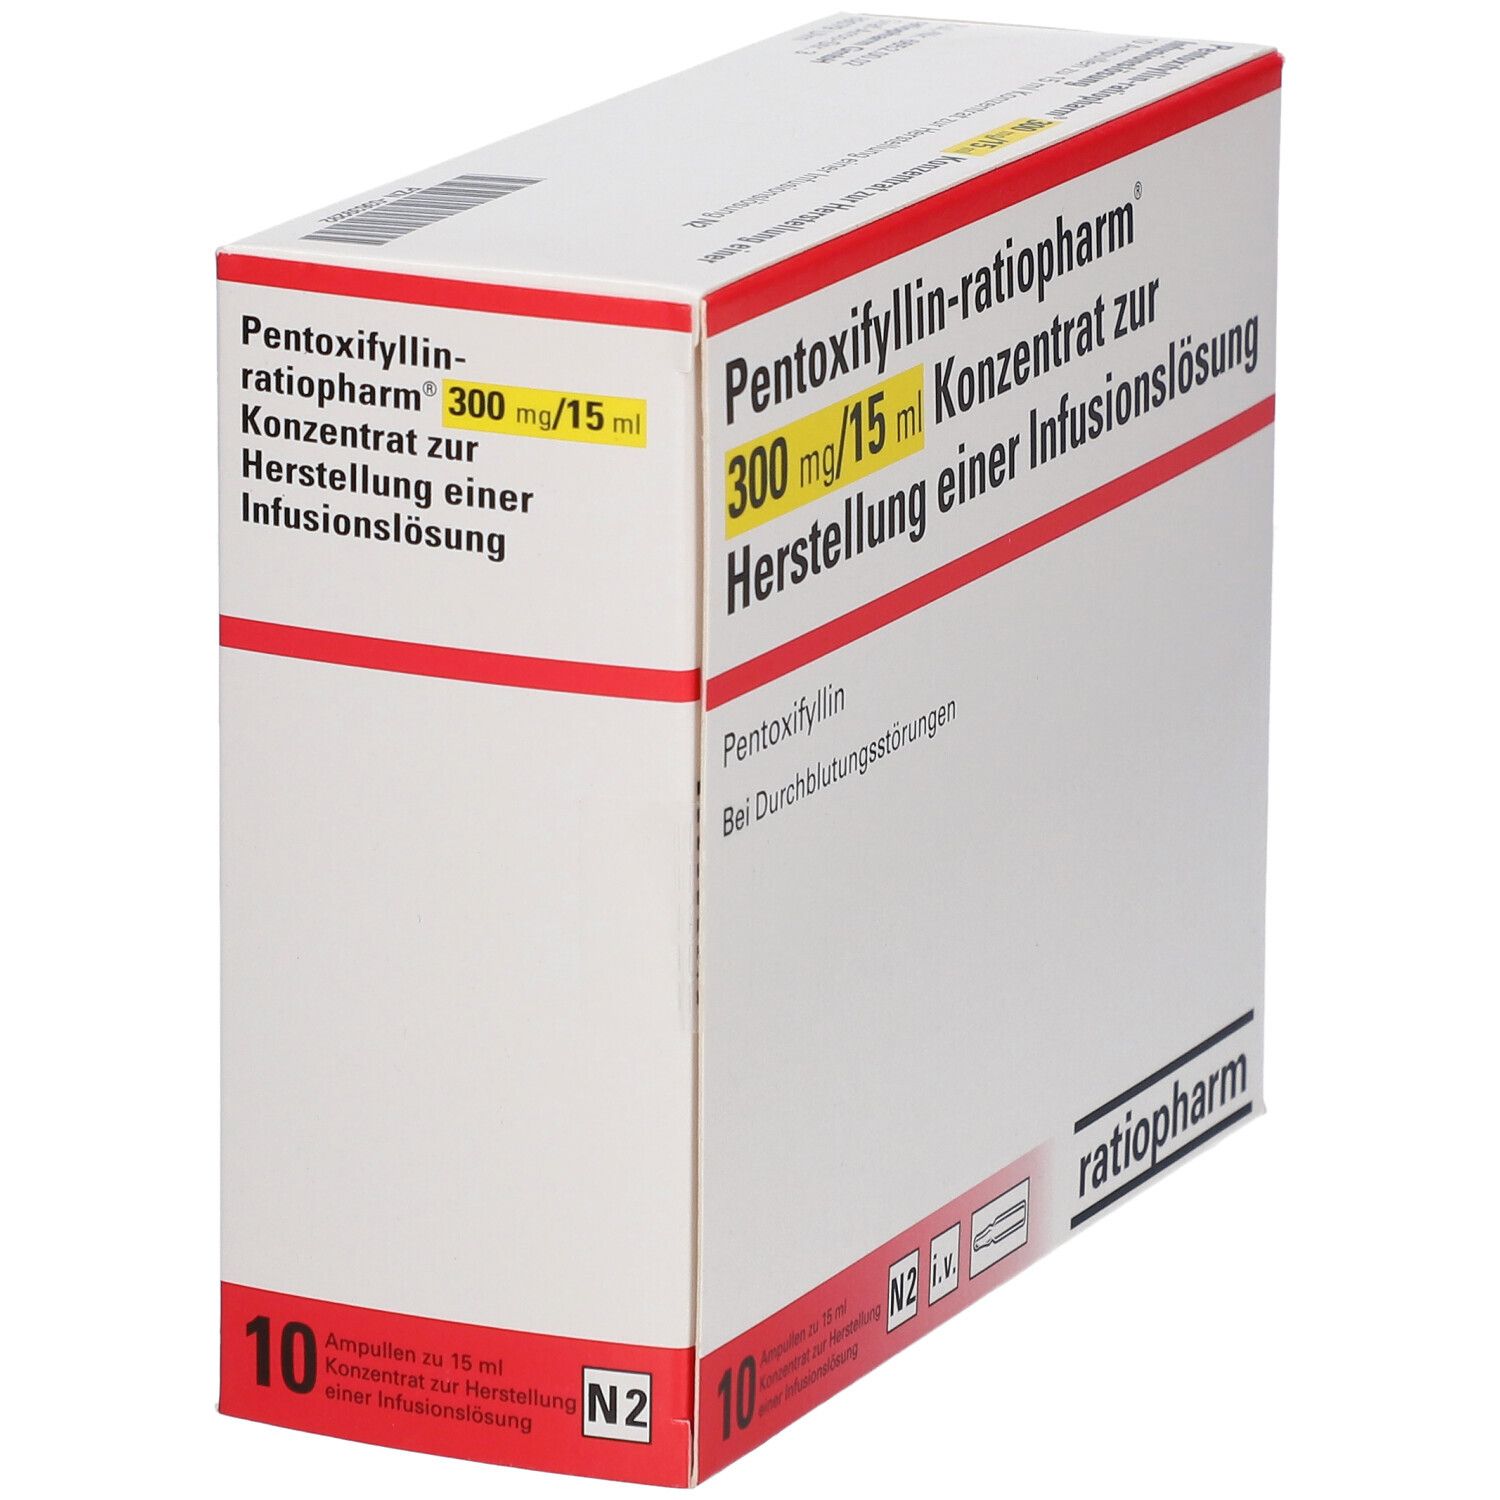 toxifyllin-ratiopharm® 300 mg/15 ml